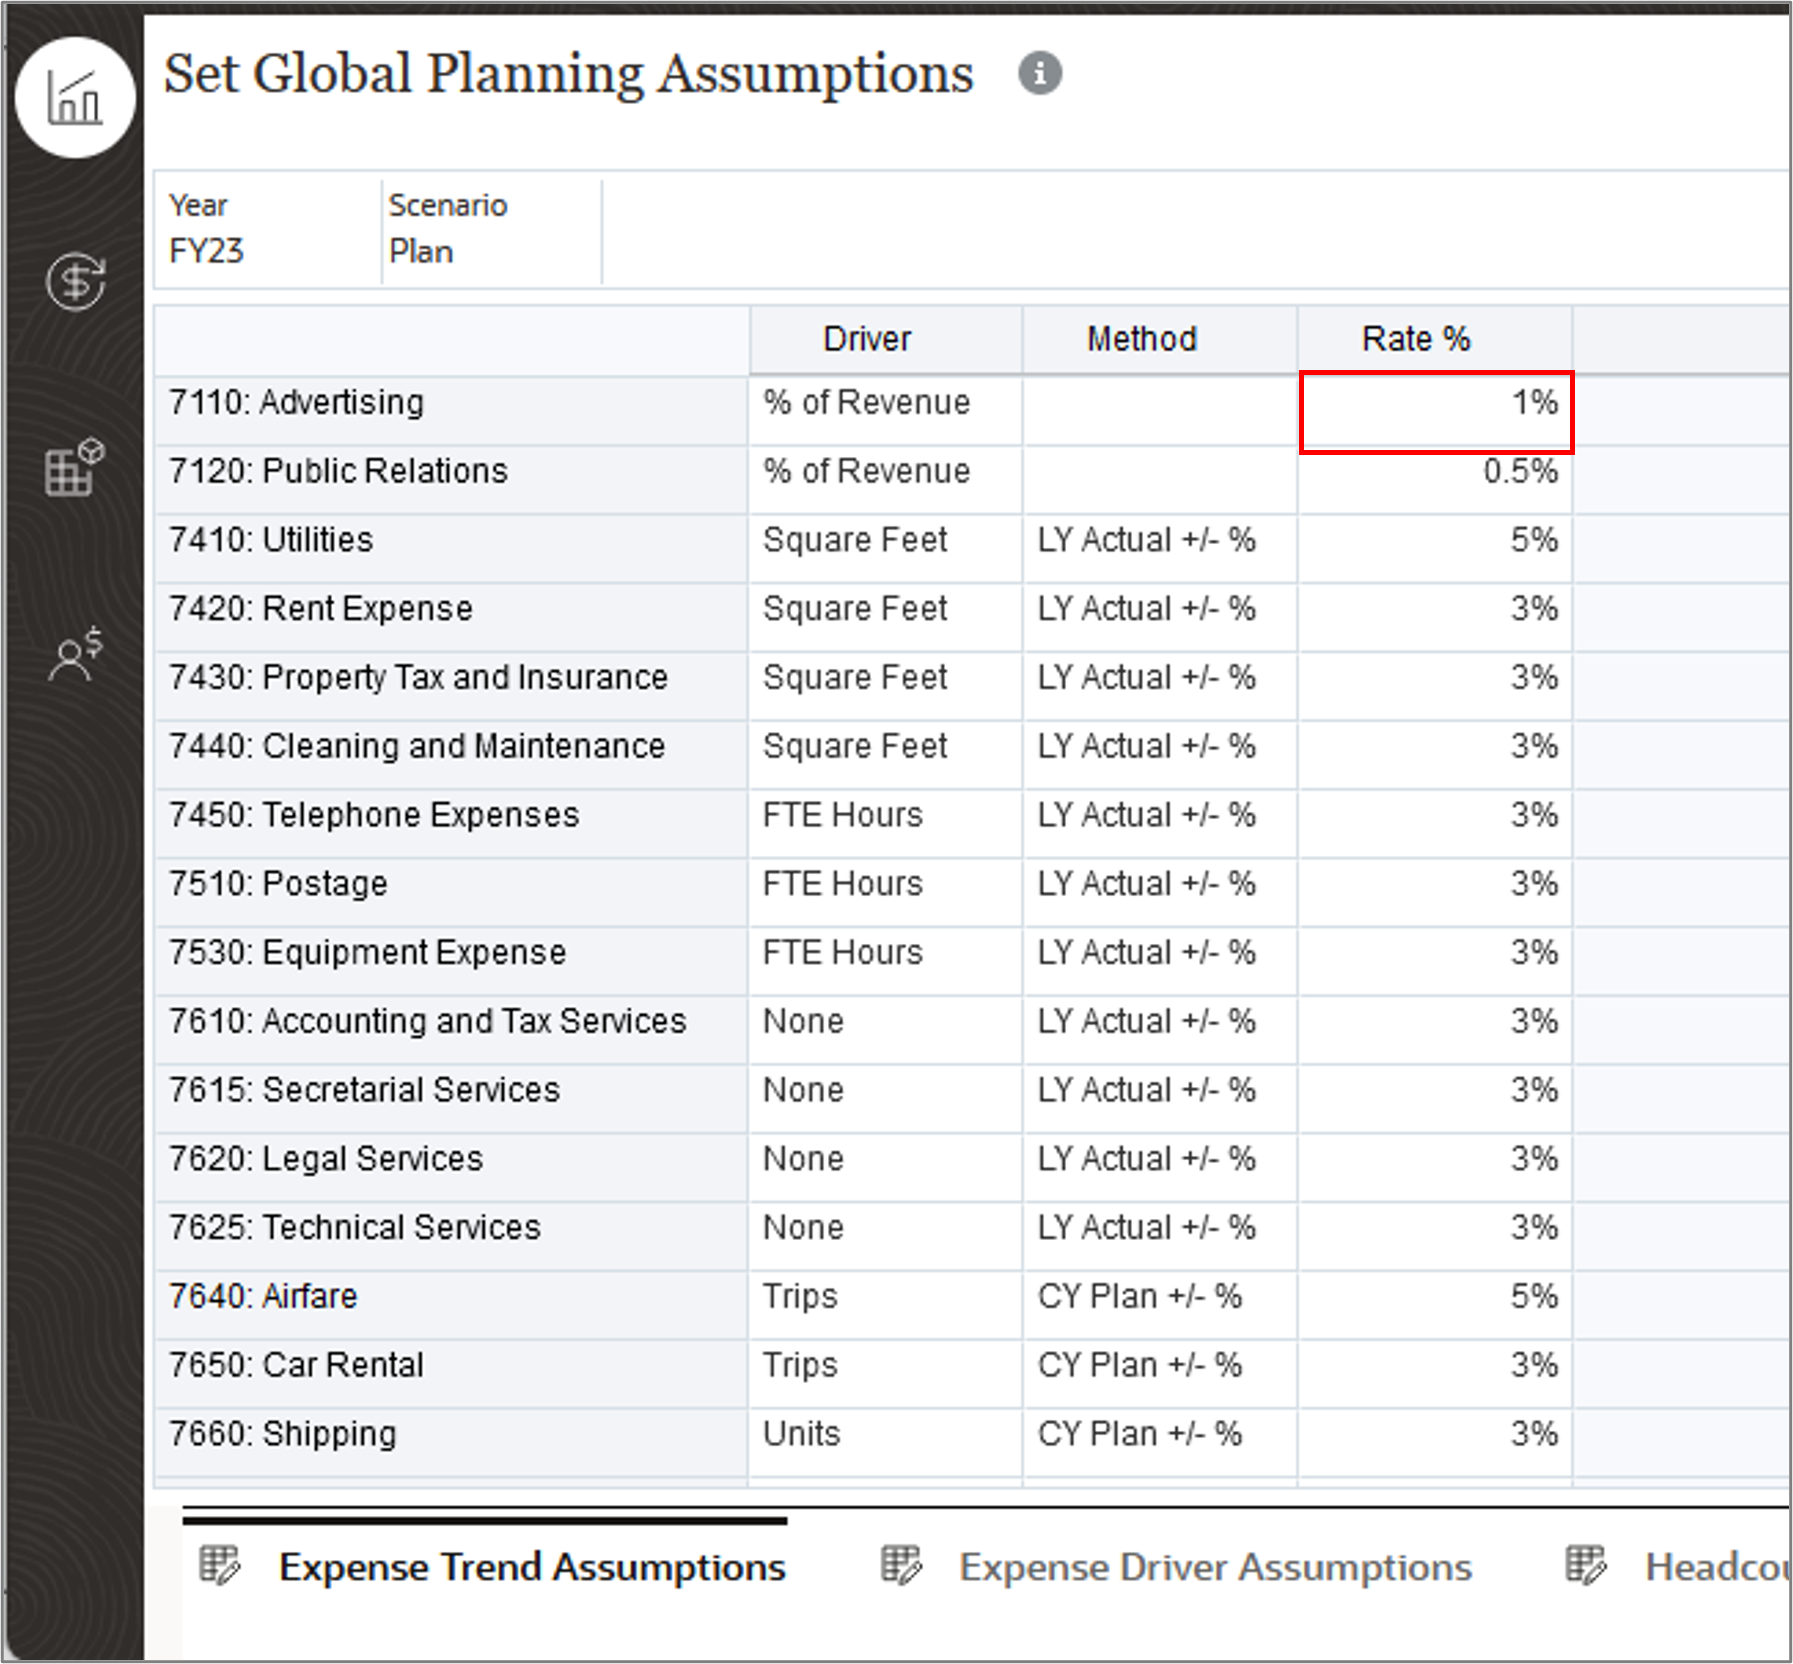 Set Global Planning Assumptions